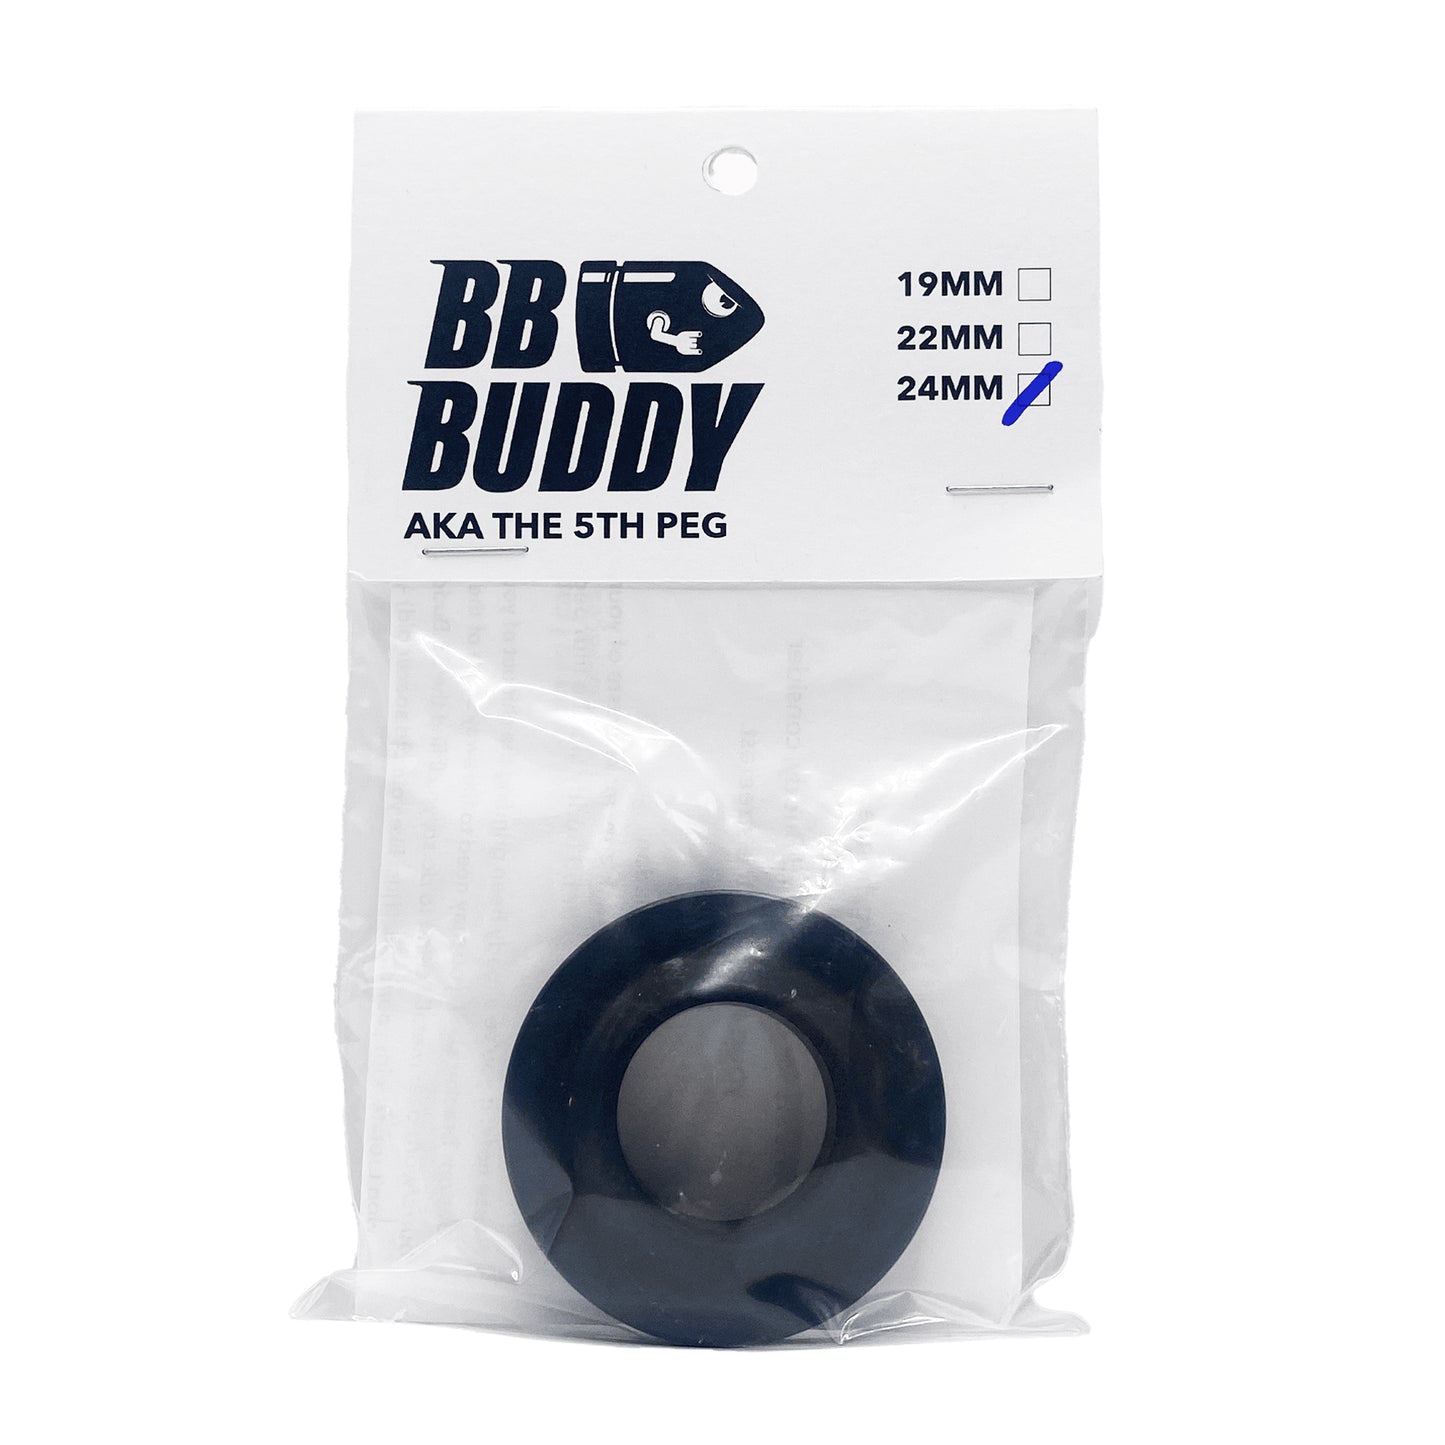 BUDDY MFG - BB Buddy